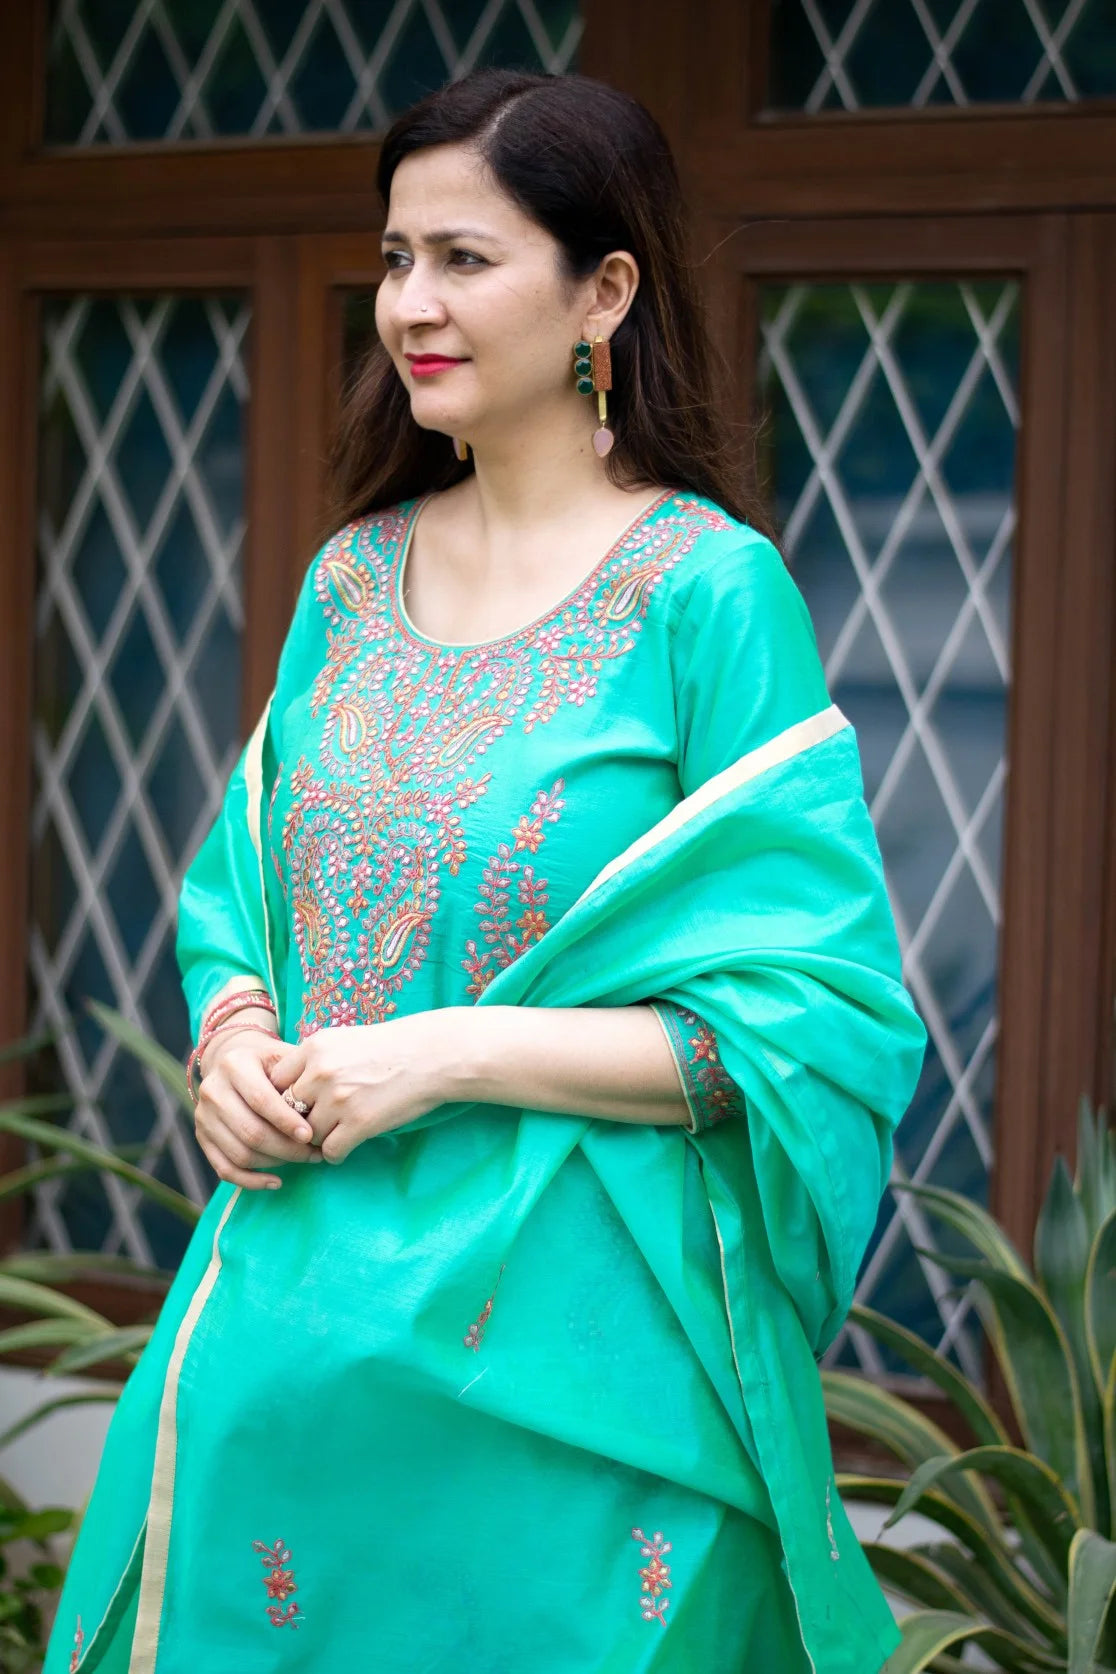 A woman dressed in a sea green zari kurta with an ornate neckline.